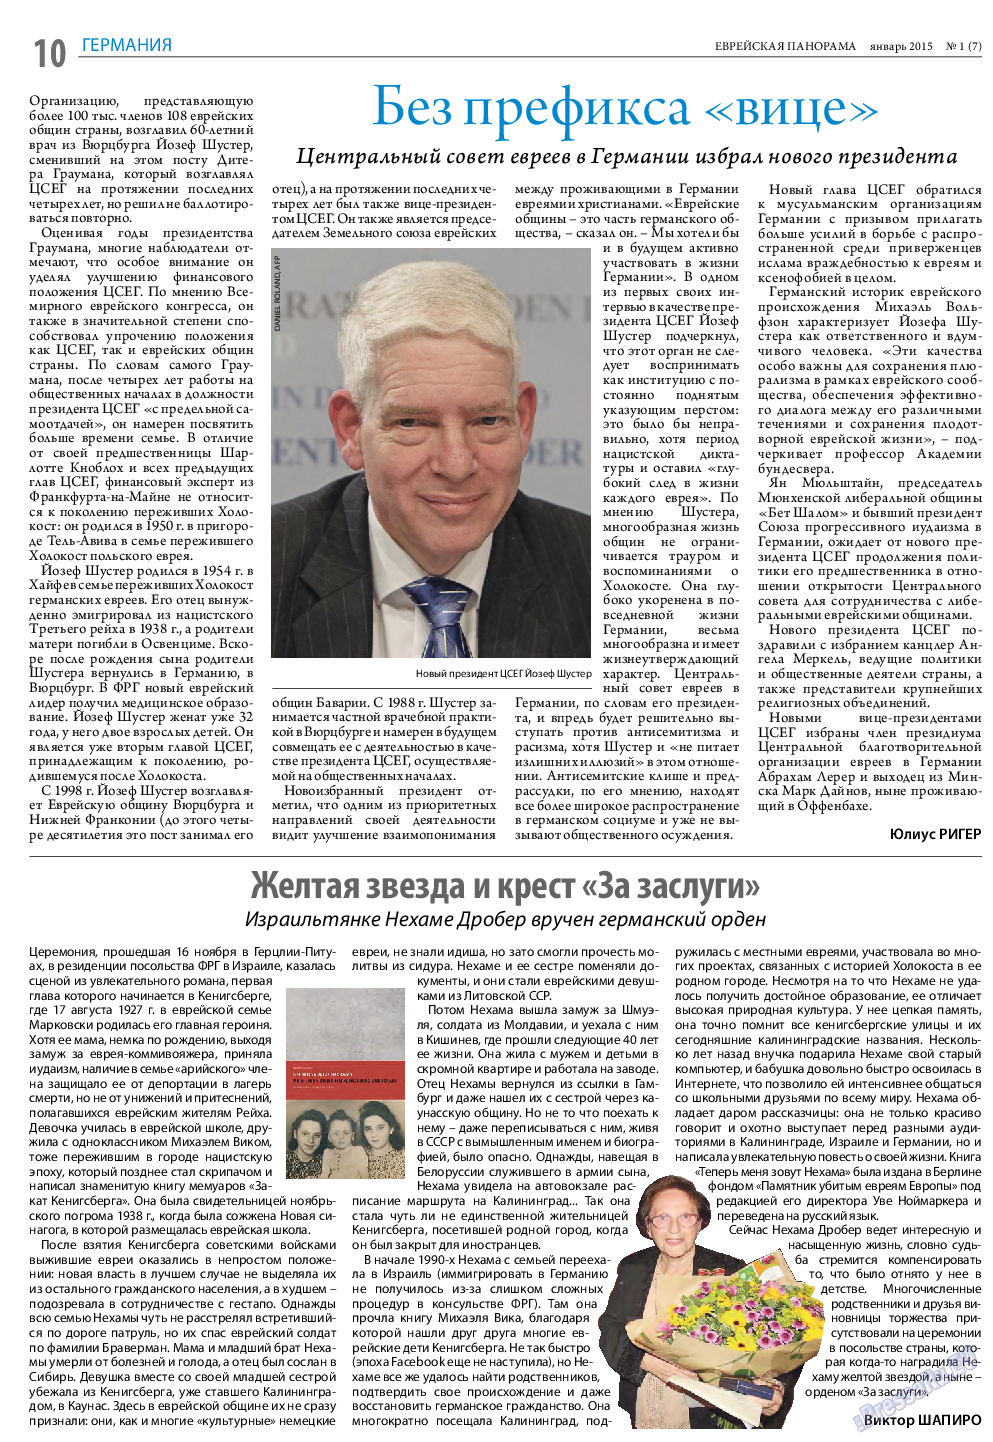 Еврейская панорама, газета. 2015 №1 стр.10